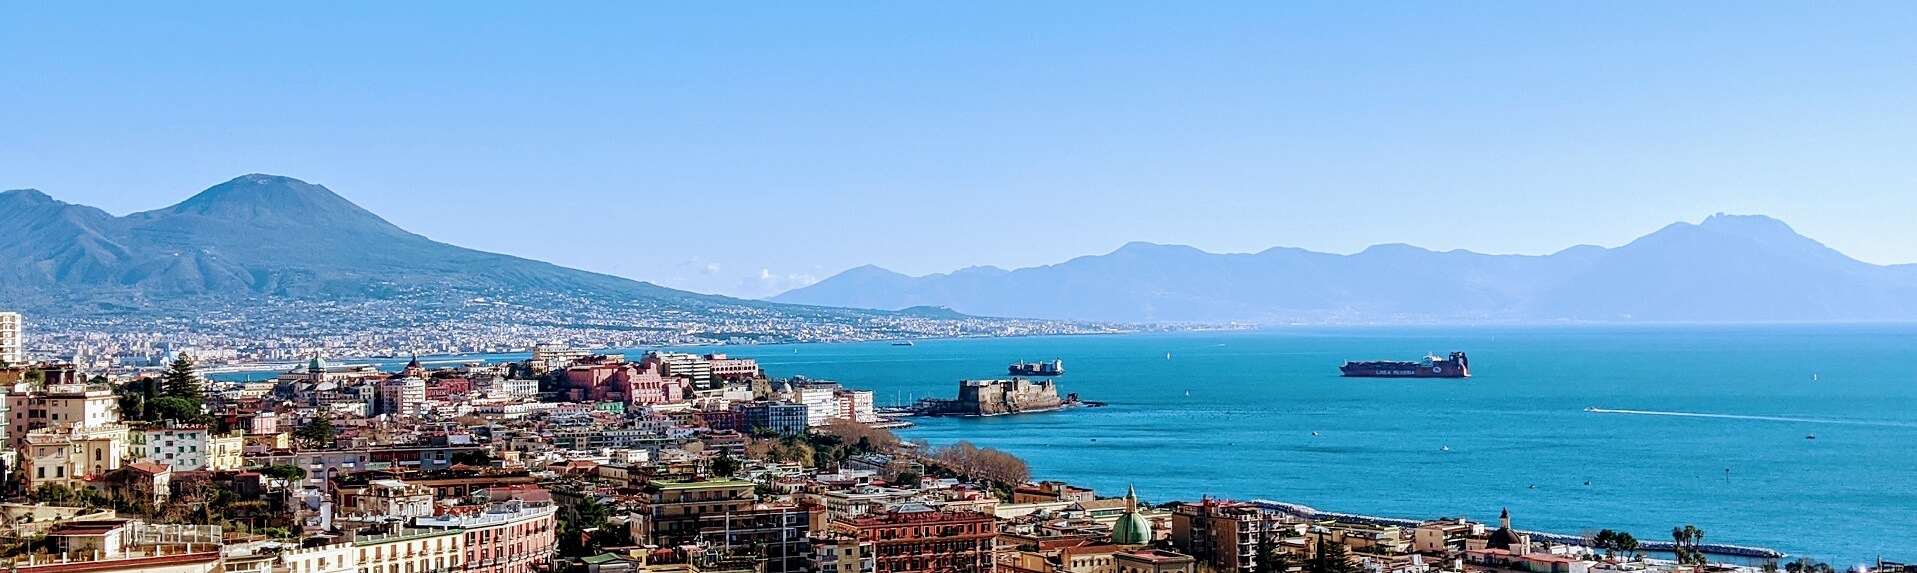 Is Naples Italy touristy?